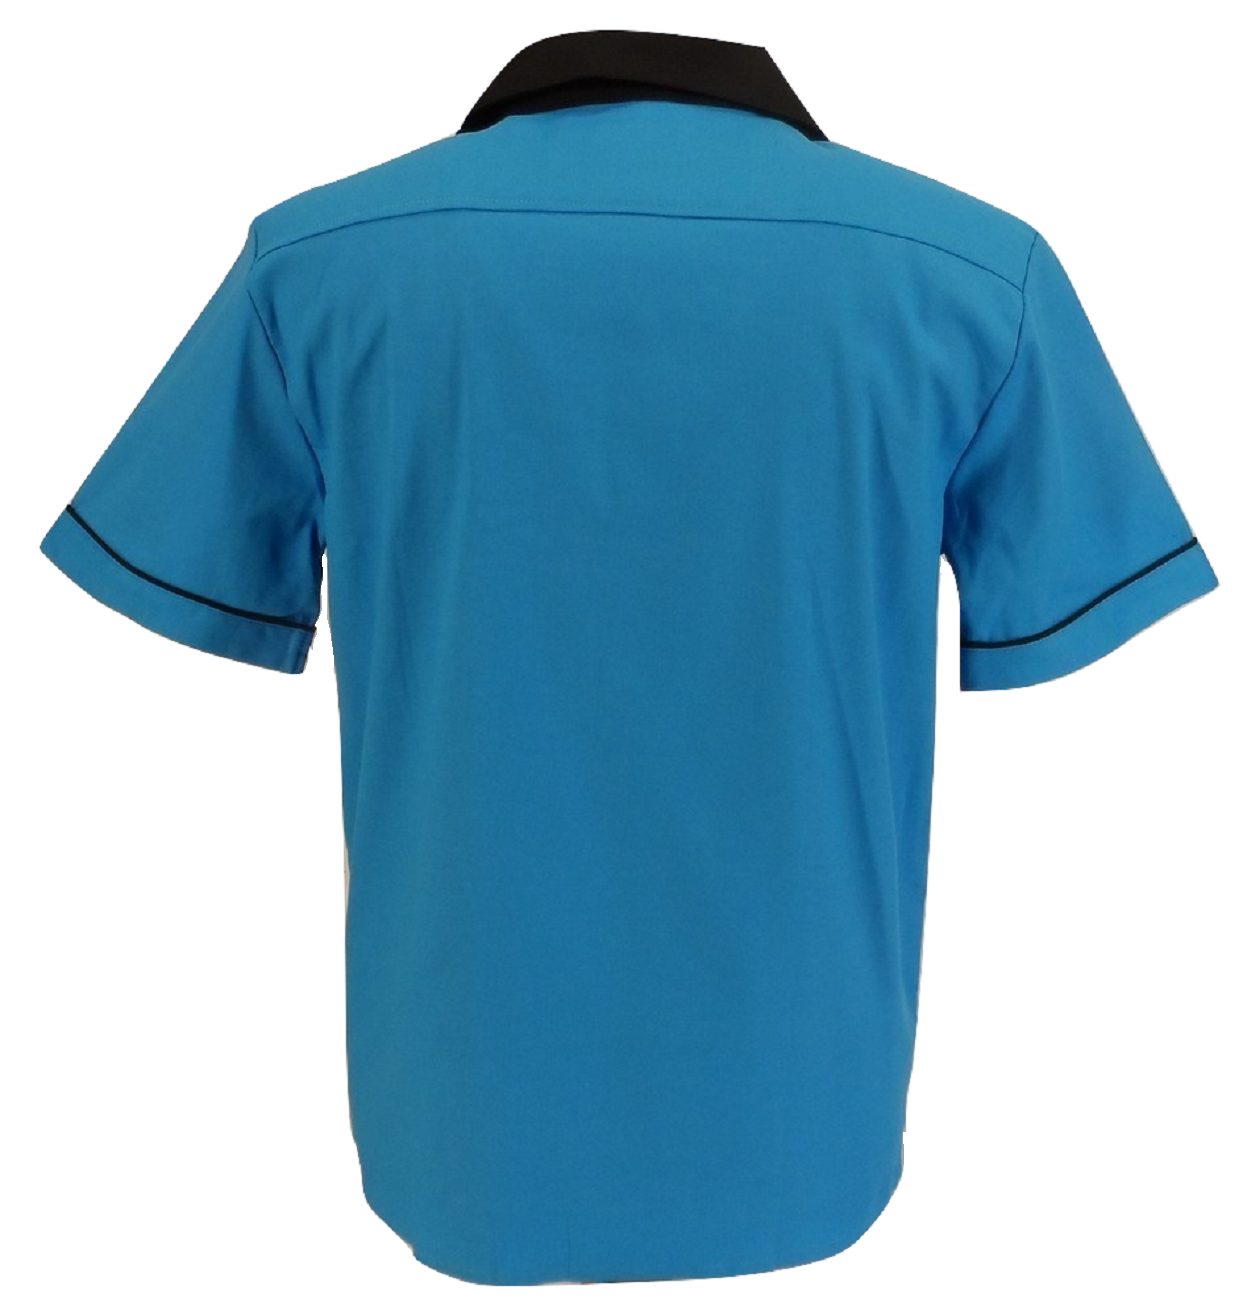 Mazeys Bowling Shirts Rockabilly Rétro Bleues Pour Hommes